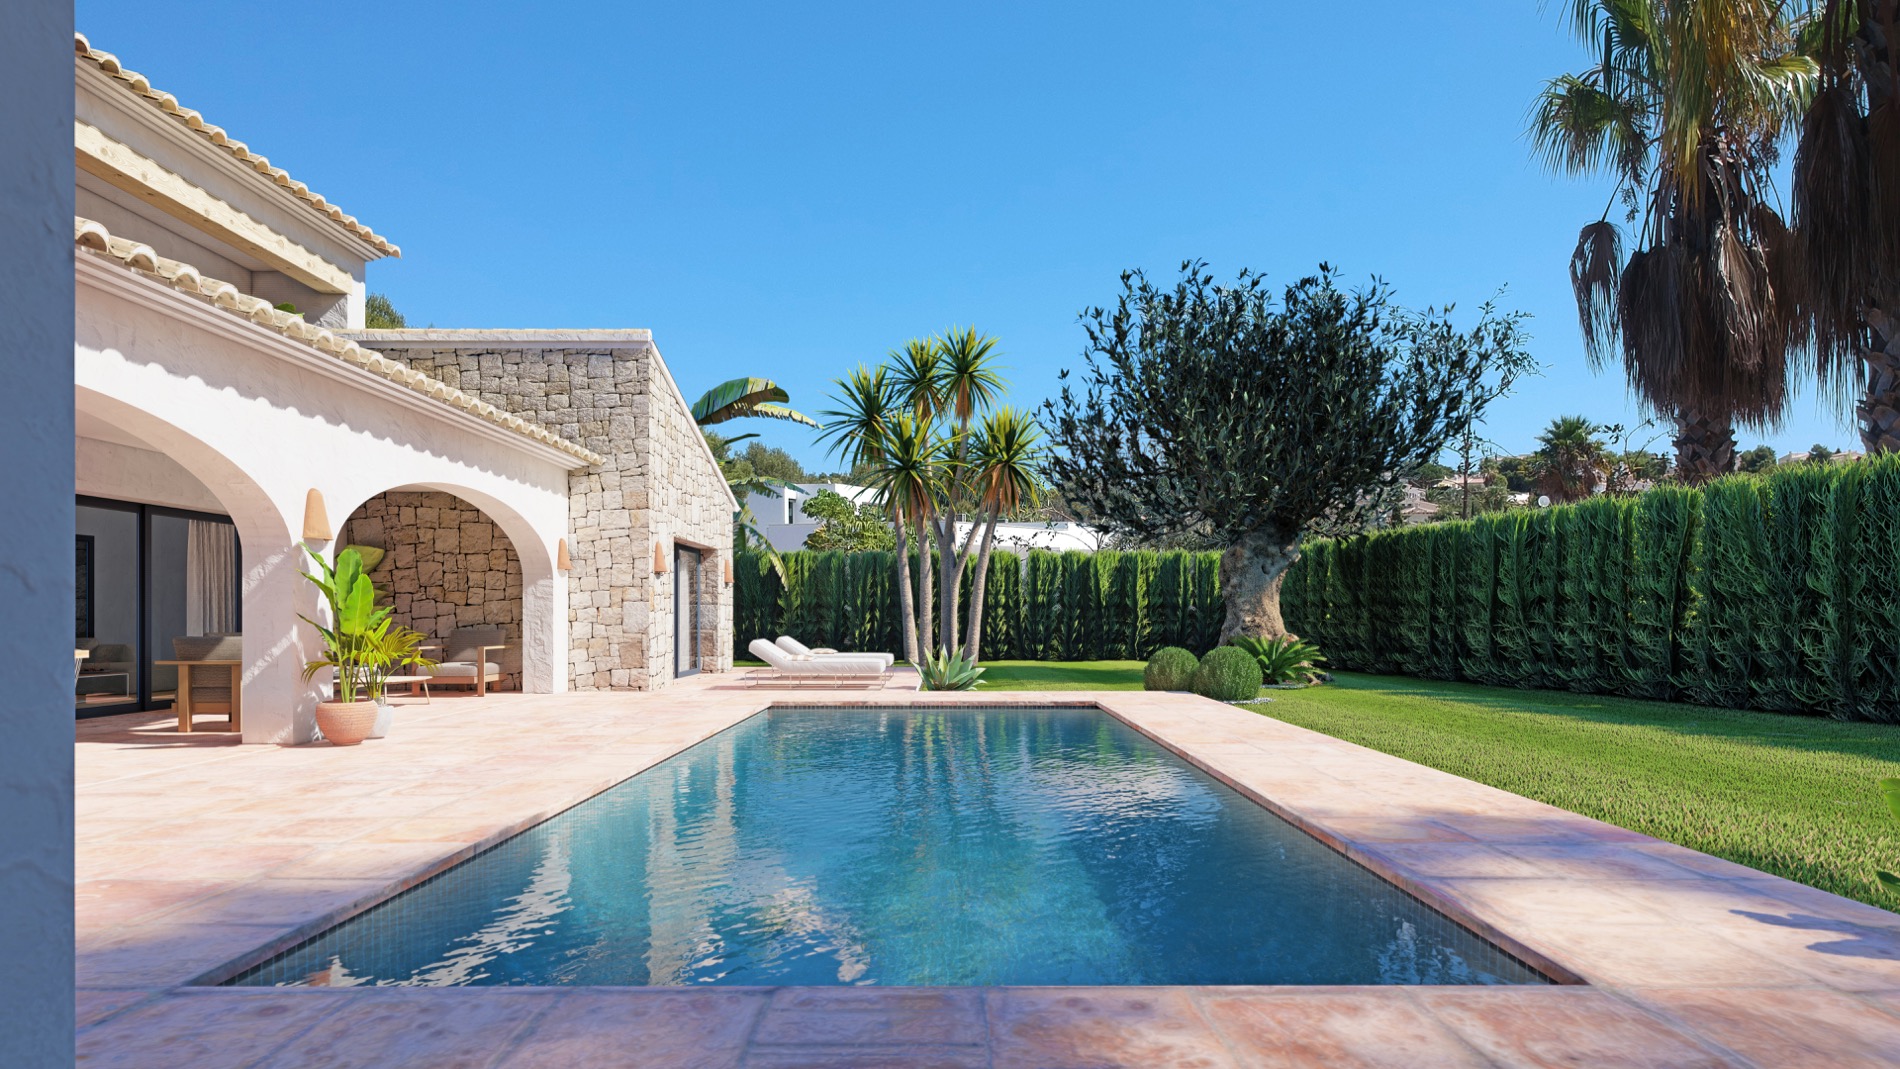 New build Mediterranean style villa for sale in La Cala Javea, Costa Blanca